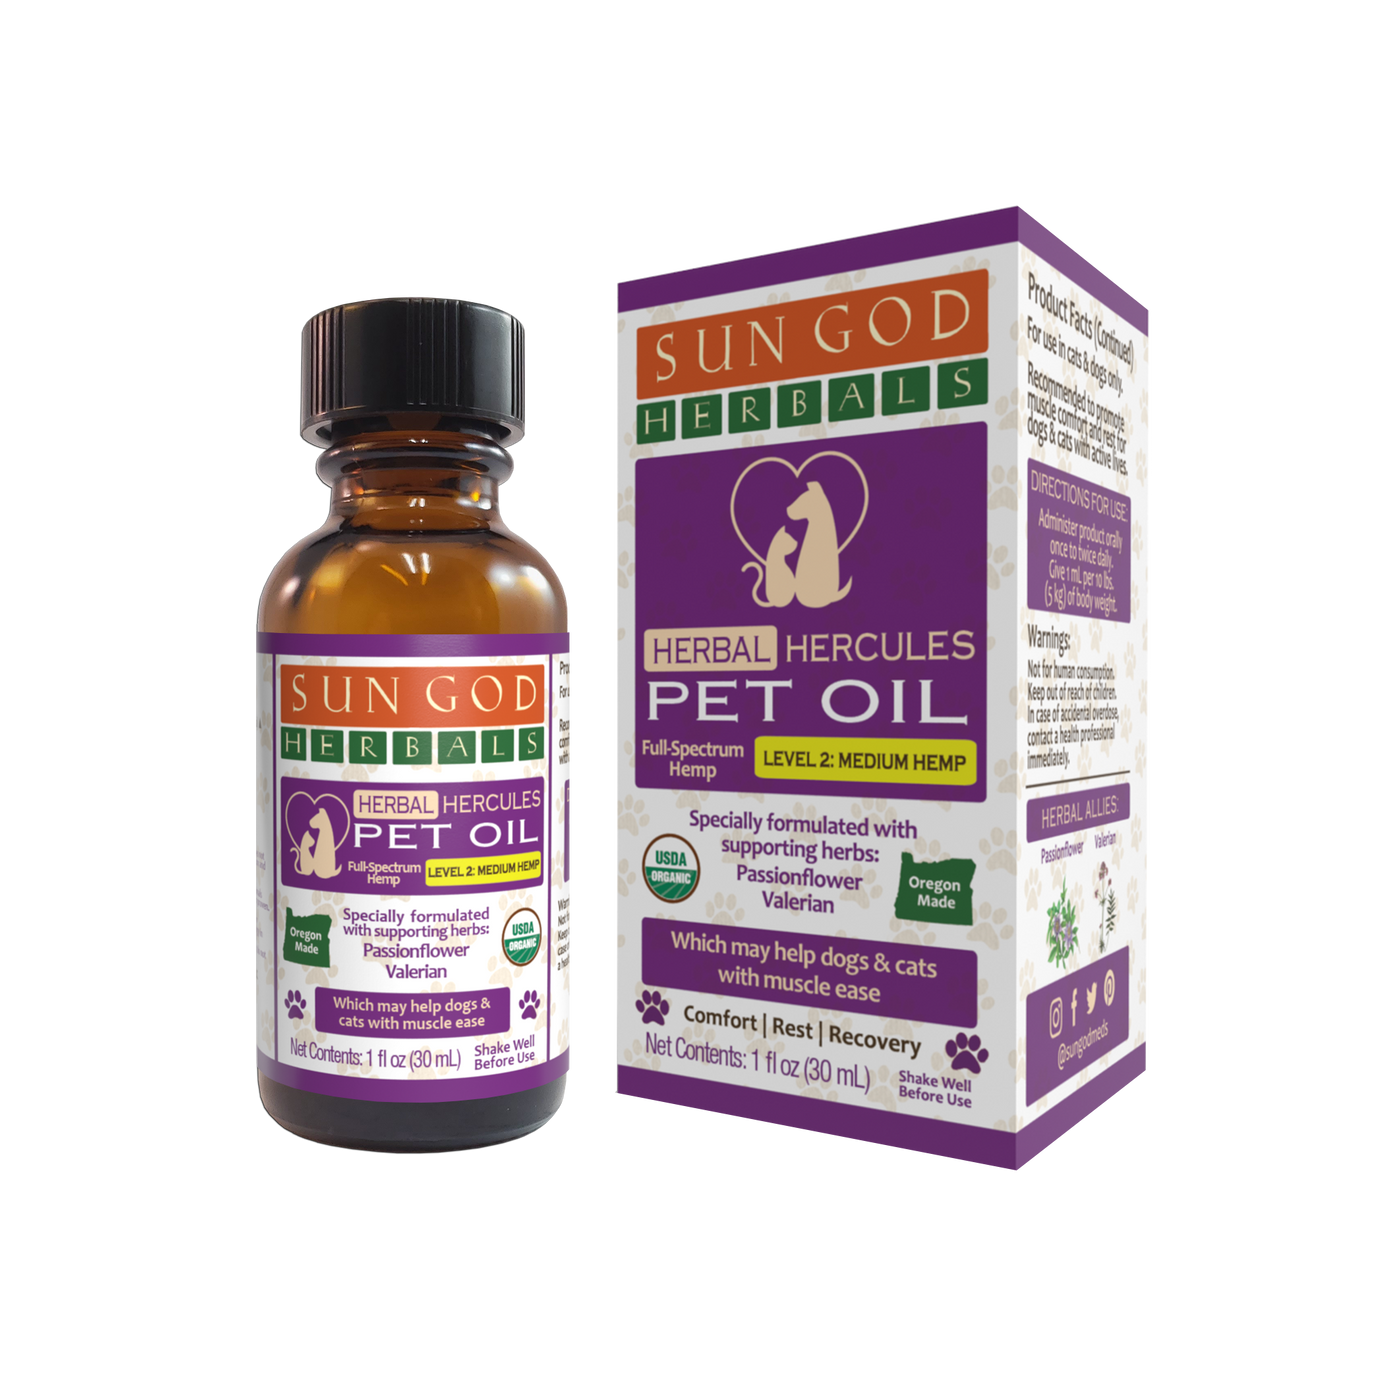 Organic Hercules Muscle Relief Hemp Pet Oil - Sun God Medicinals